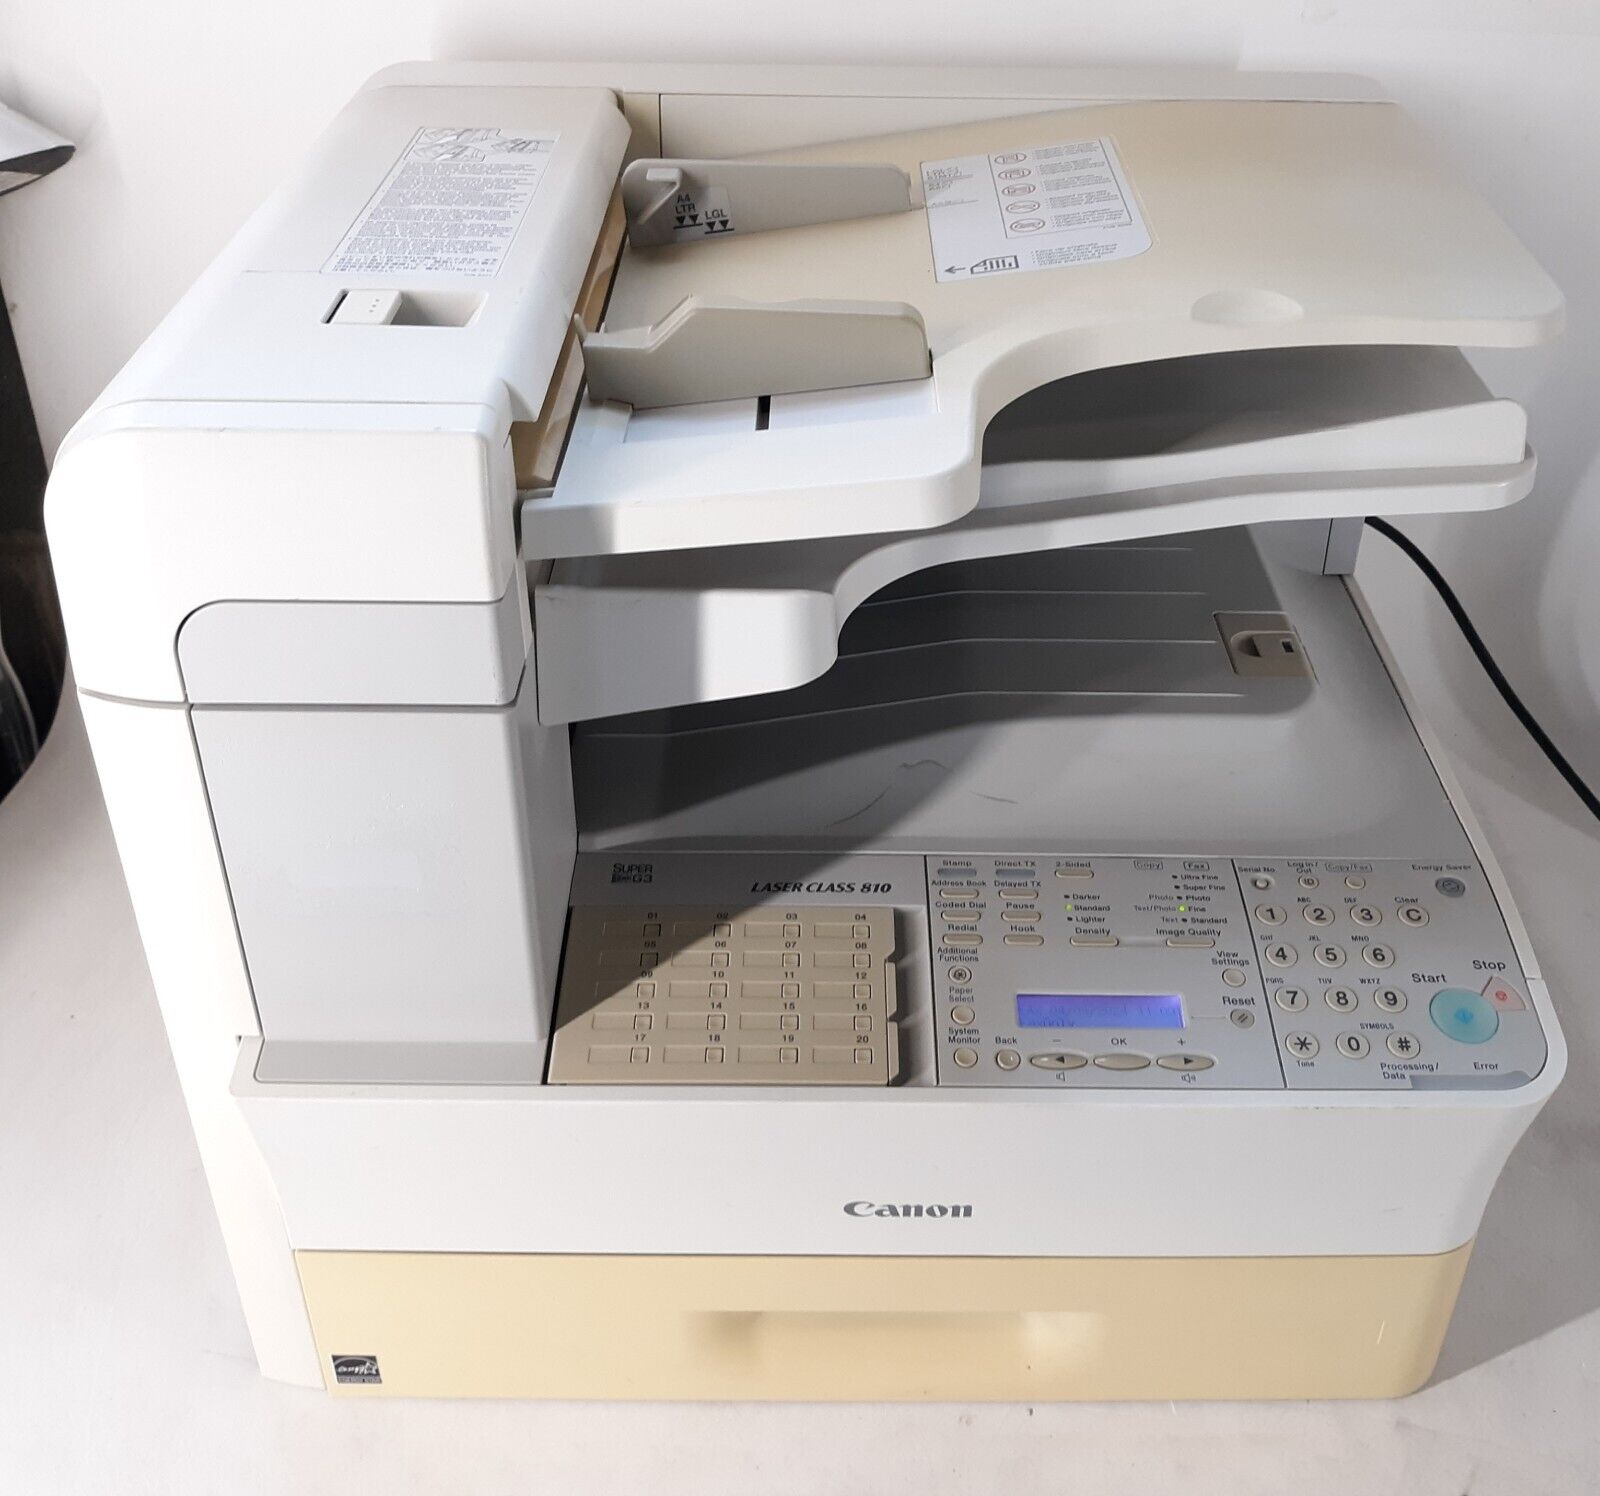 Canon Super G3 Laser Class 810 Fax Machine Printer w/ Power Cord *TESTED*